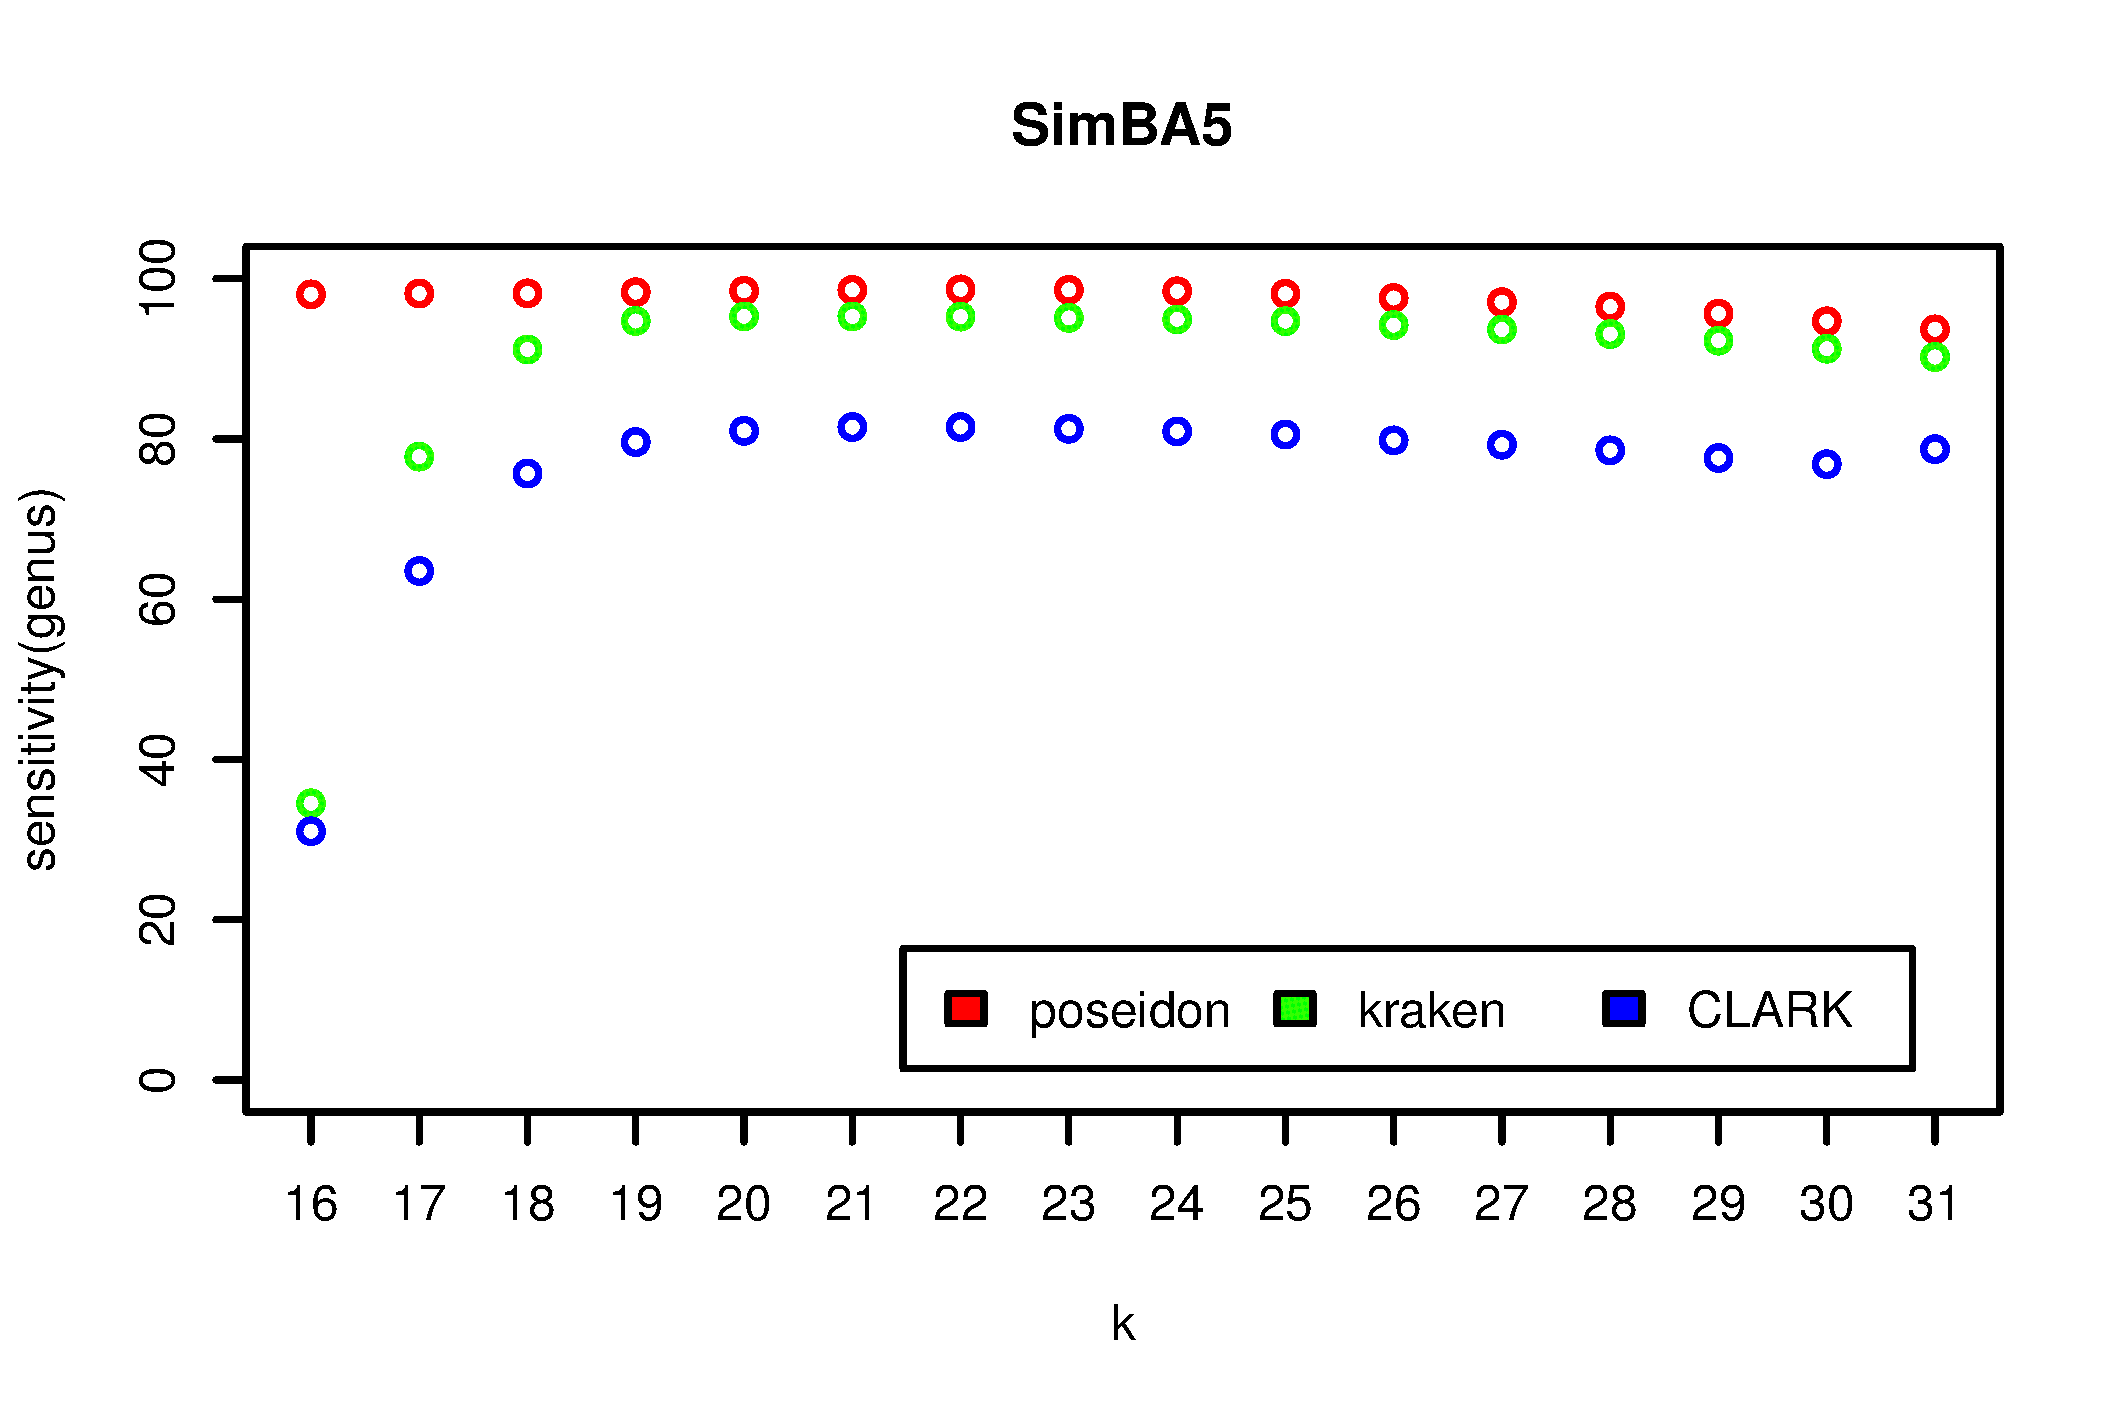 SimBA5 (from Kraken paper) sensitivity at genus-level